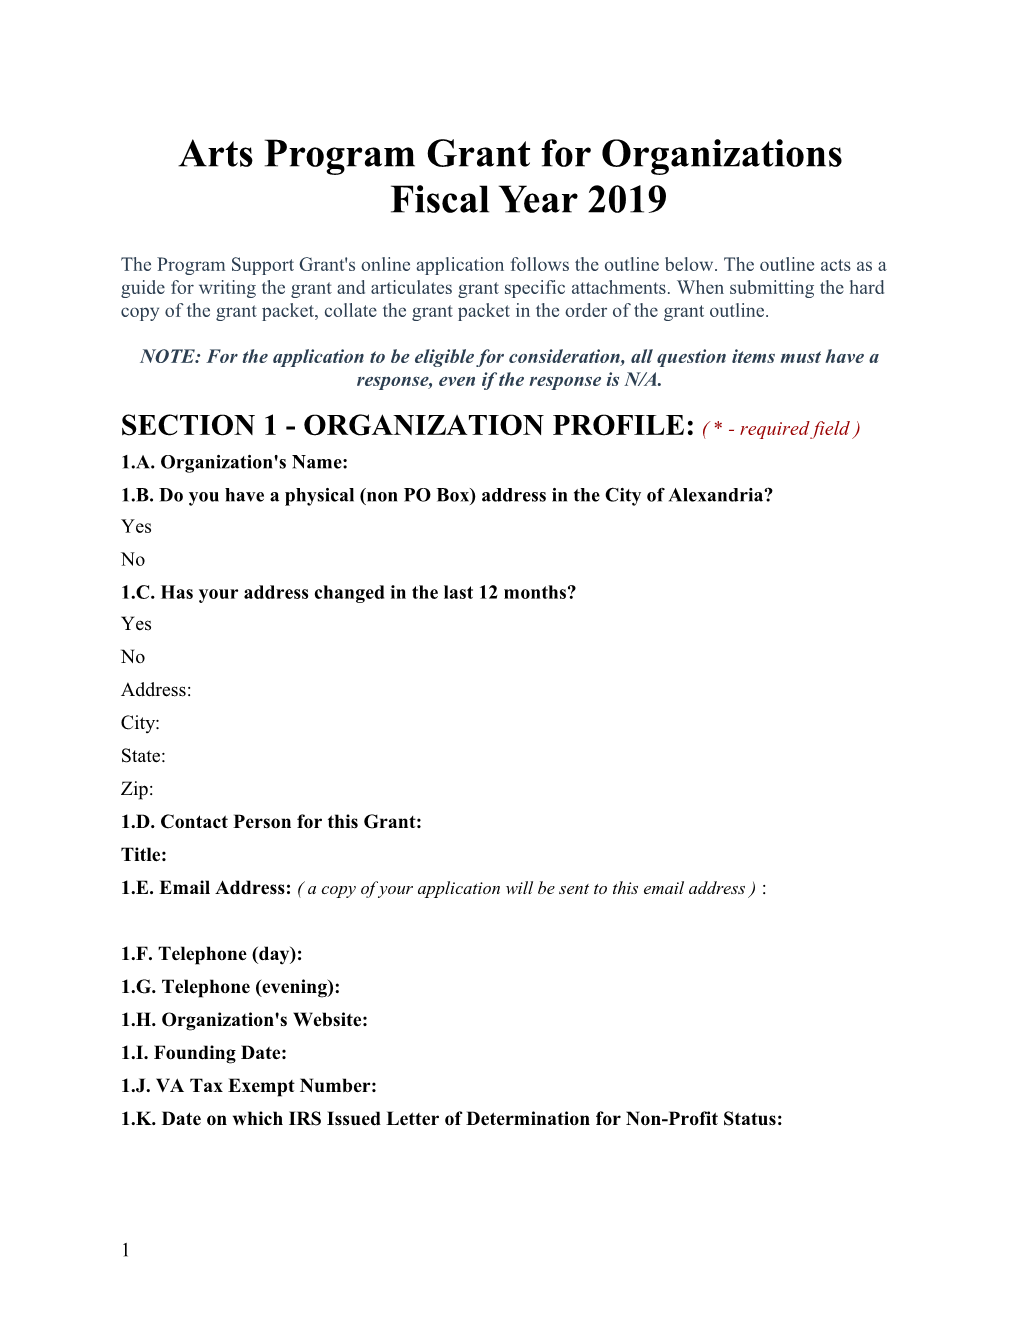 Arts Program Grant for Organizationsfiscal Year 2019